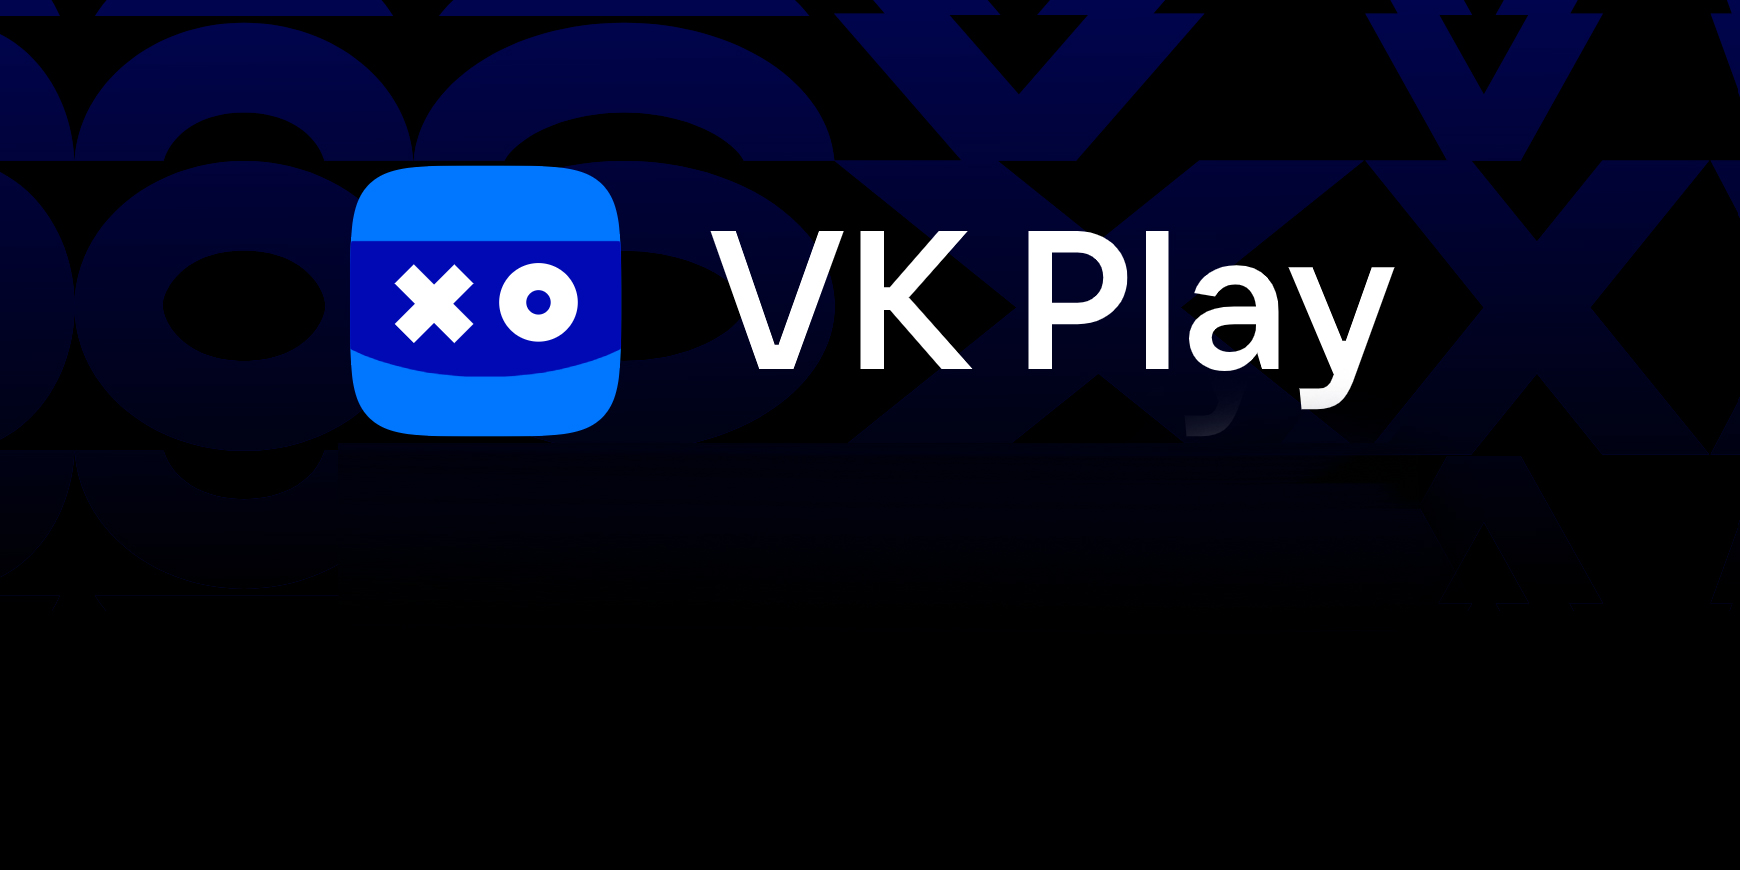 ✅ VK Play Cloud promo code 6 hours➡️ VKPlay account